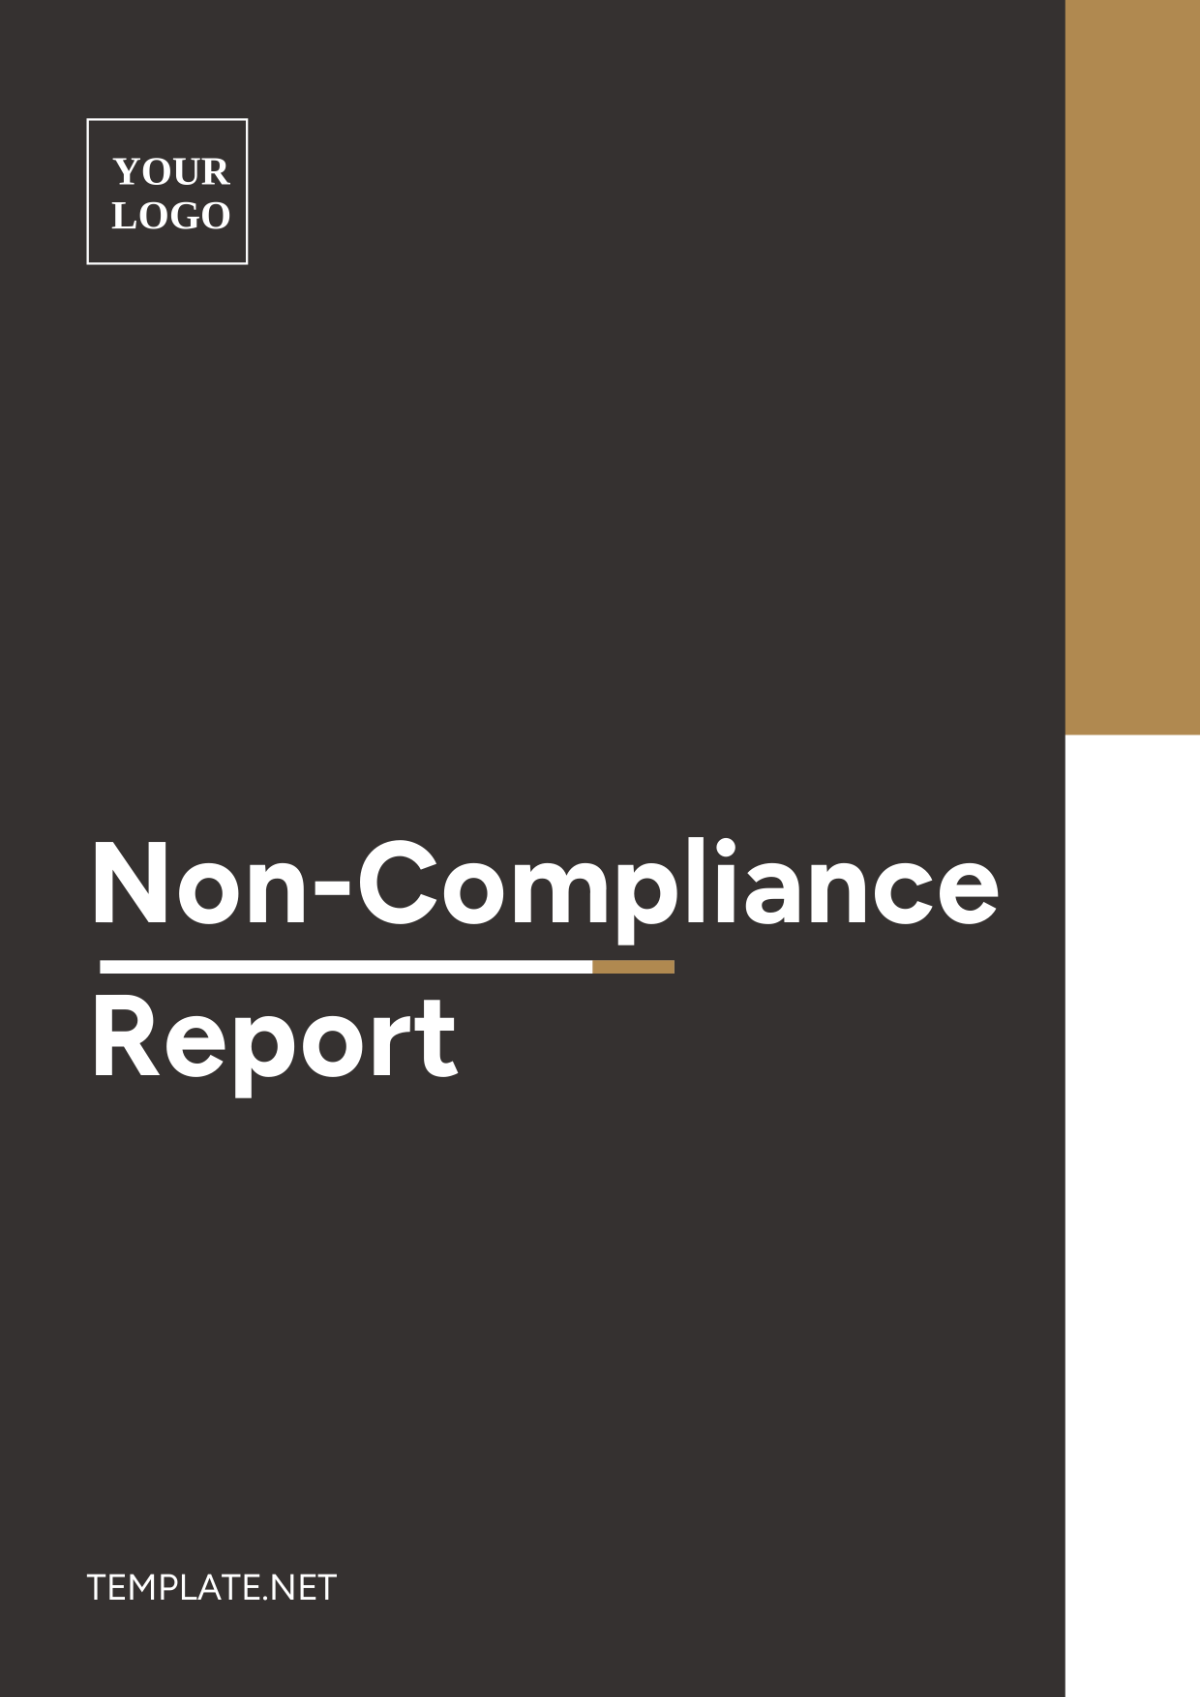 Non-Compliance Report Template